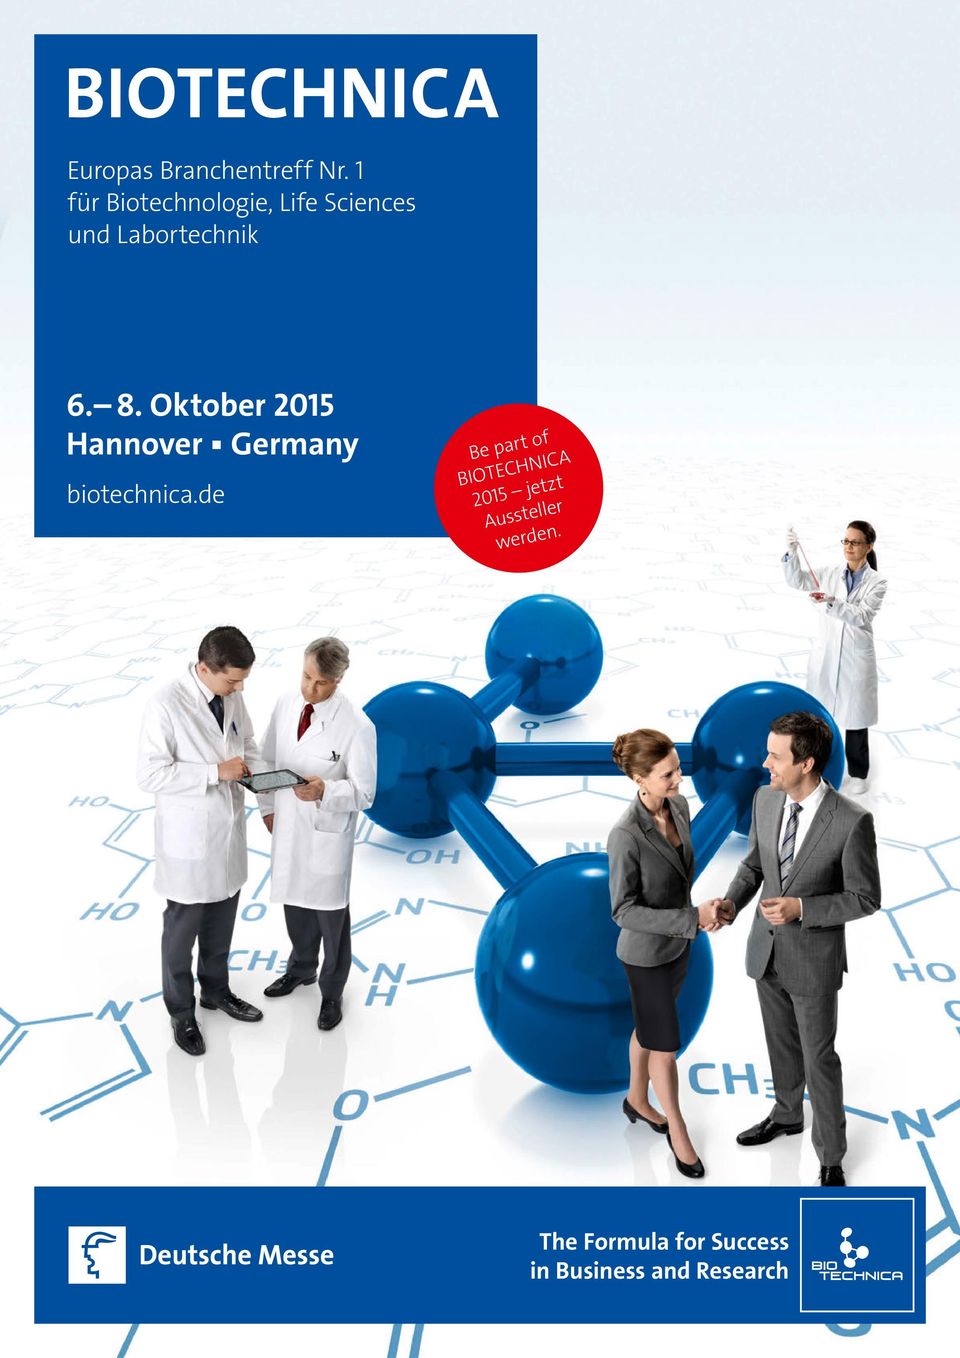 Oktober 2015 Hannover Germany biotechnica.